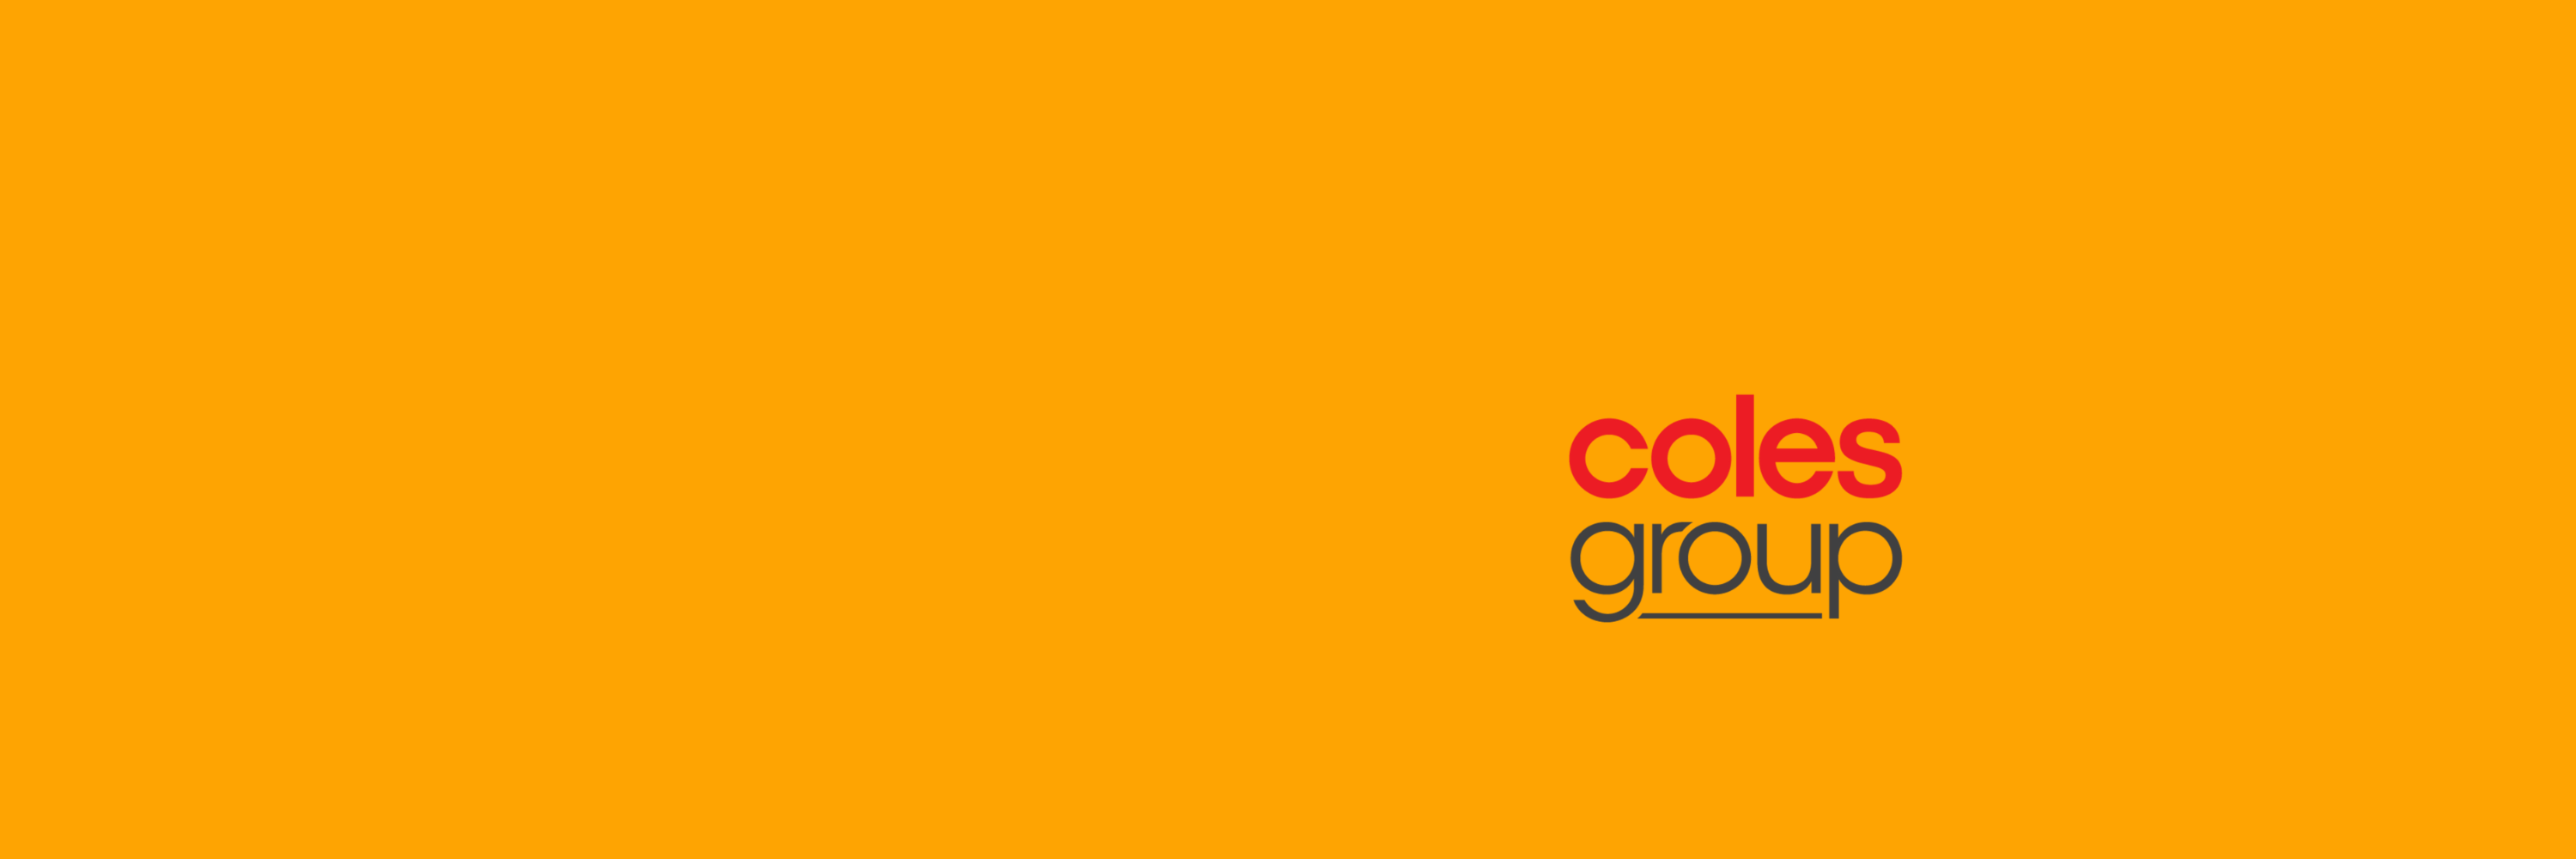 coles group logo